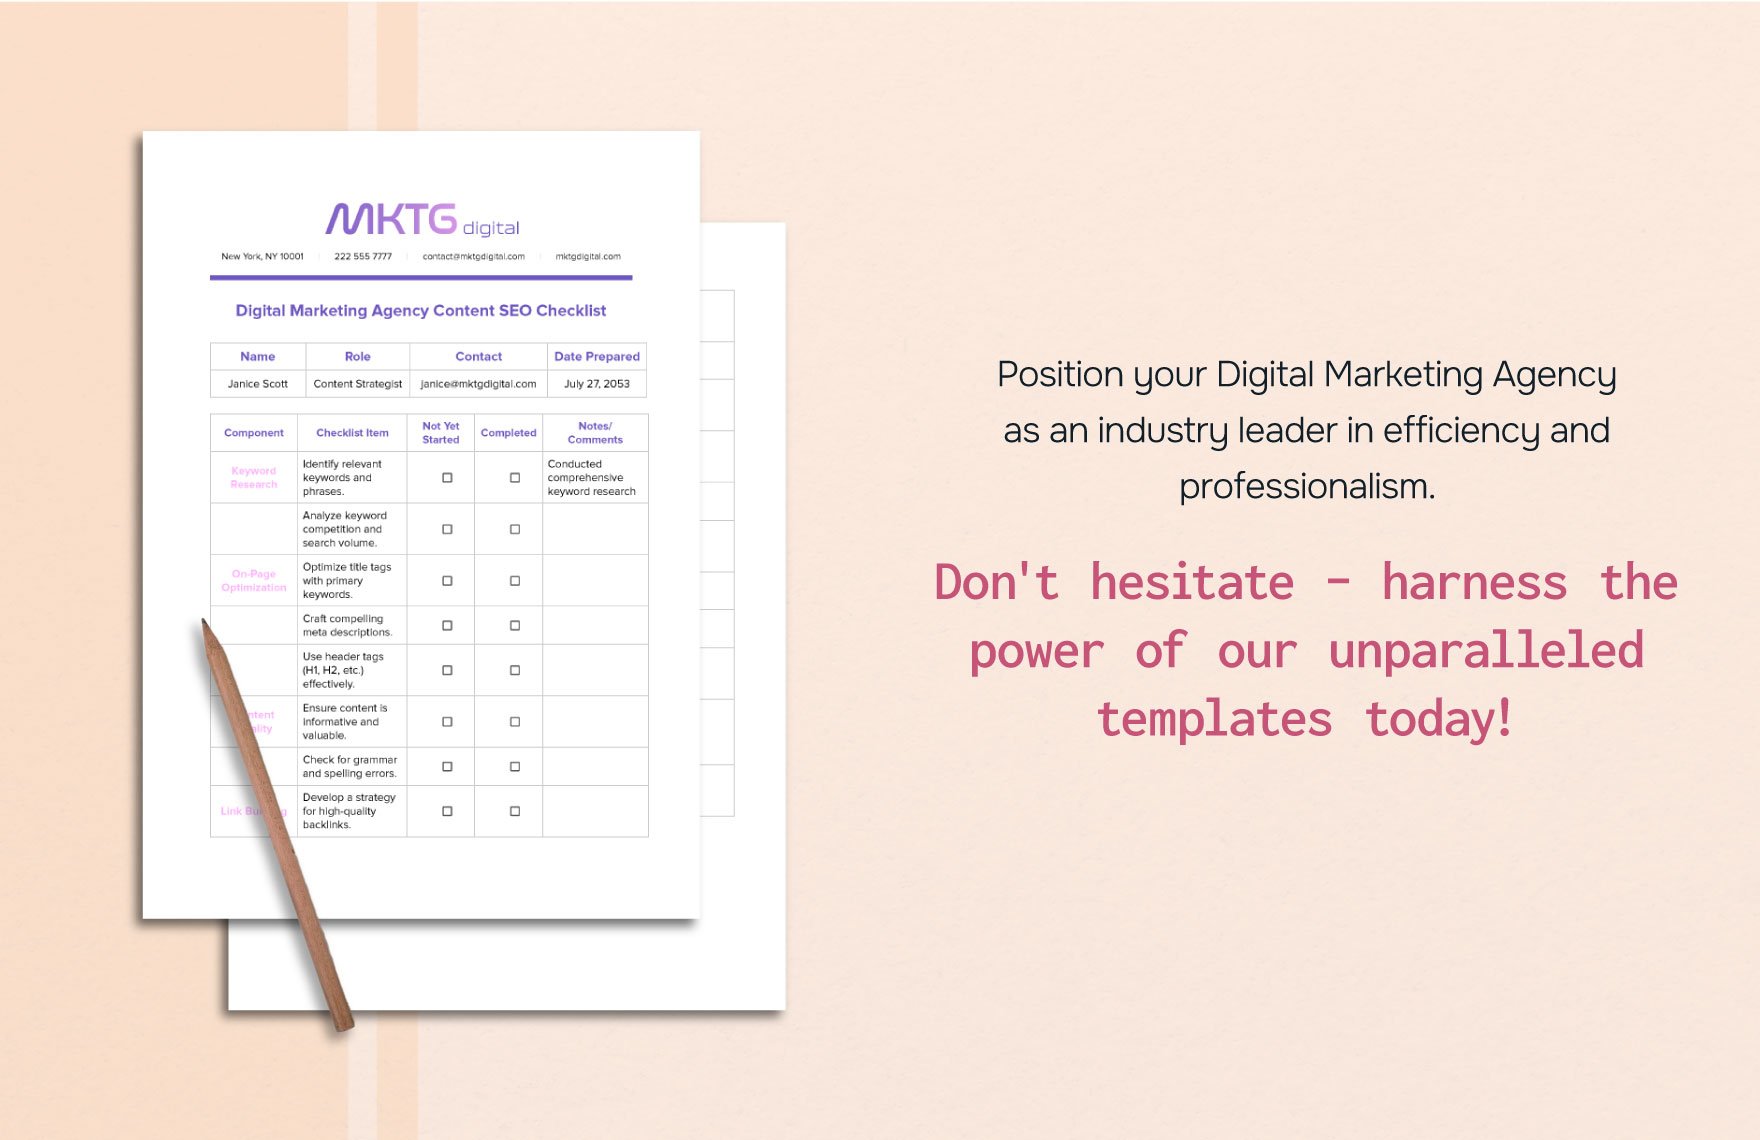 Digital Marketing Agency Content SEO Checklist Template